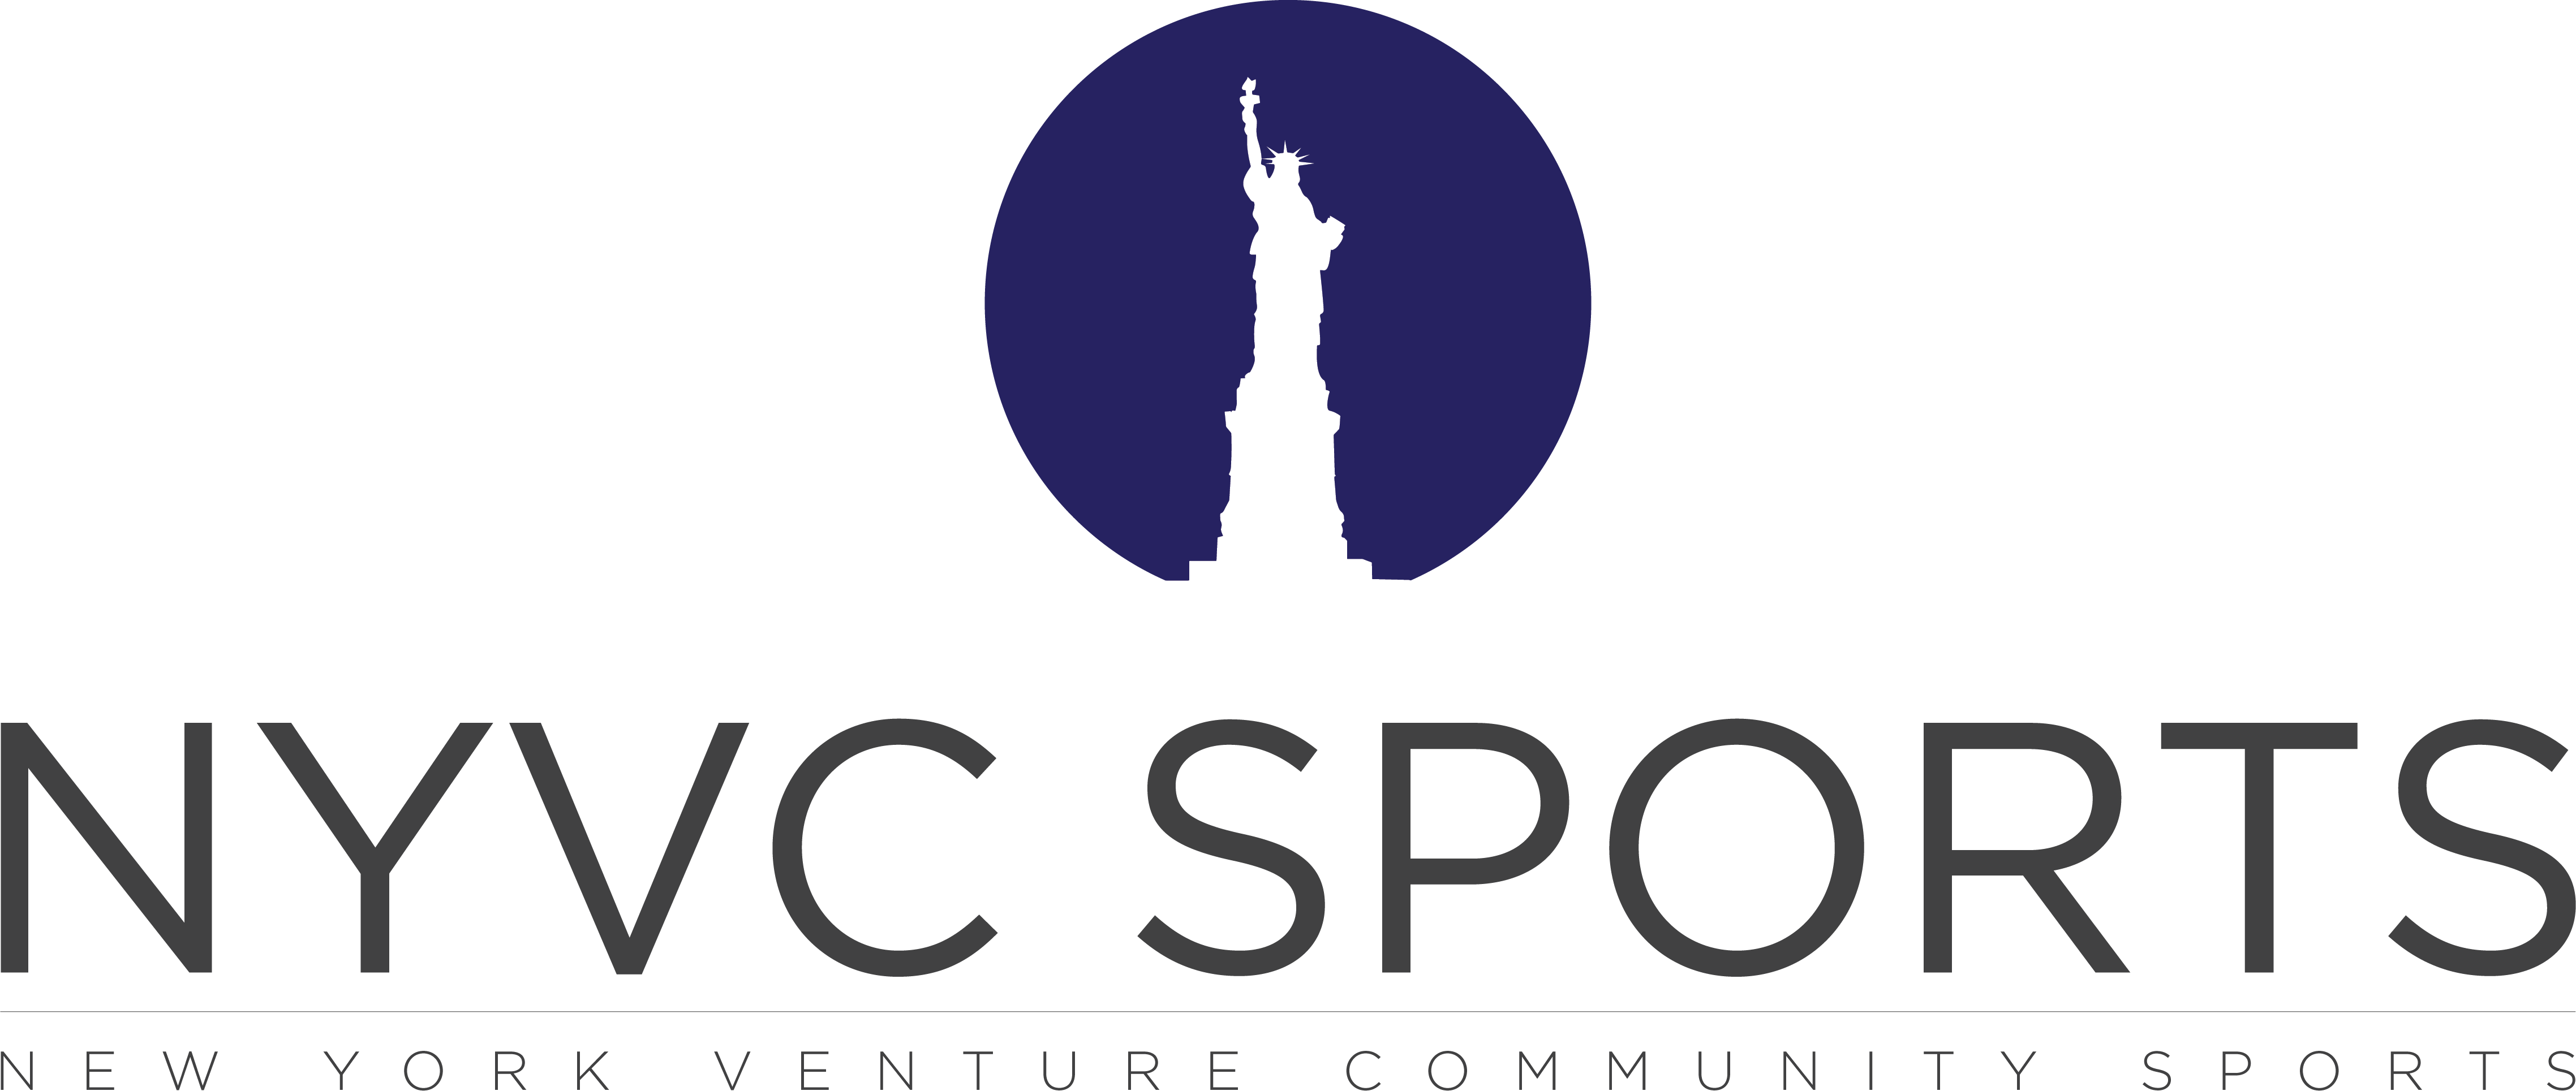 NYVC Sports logo